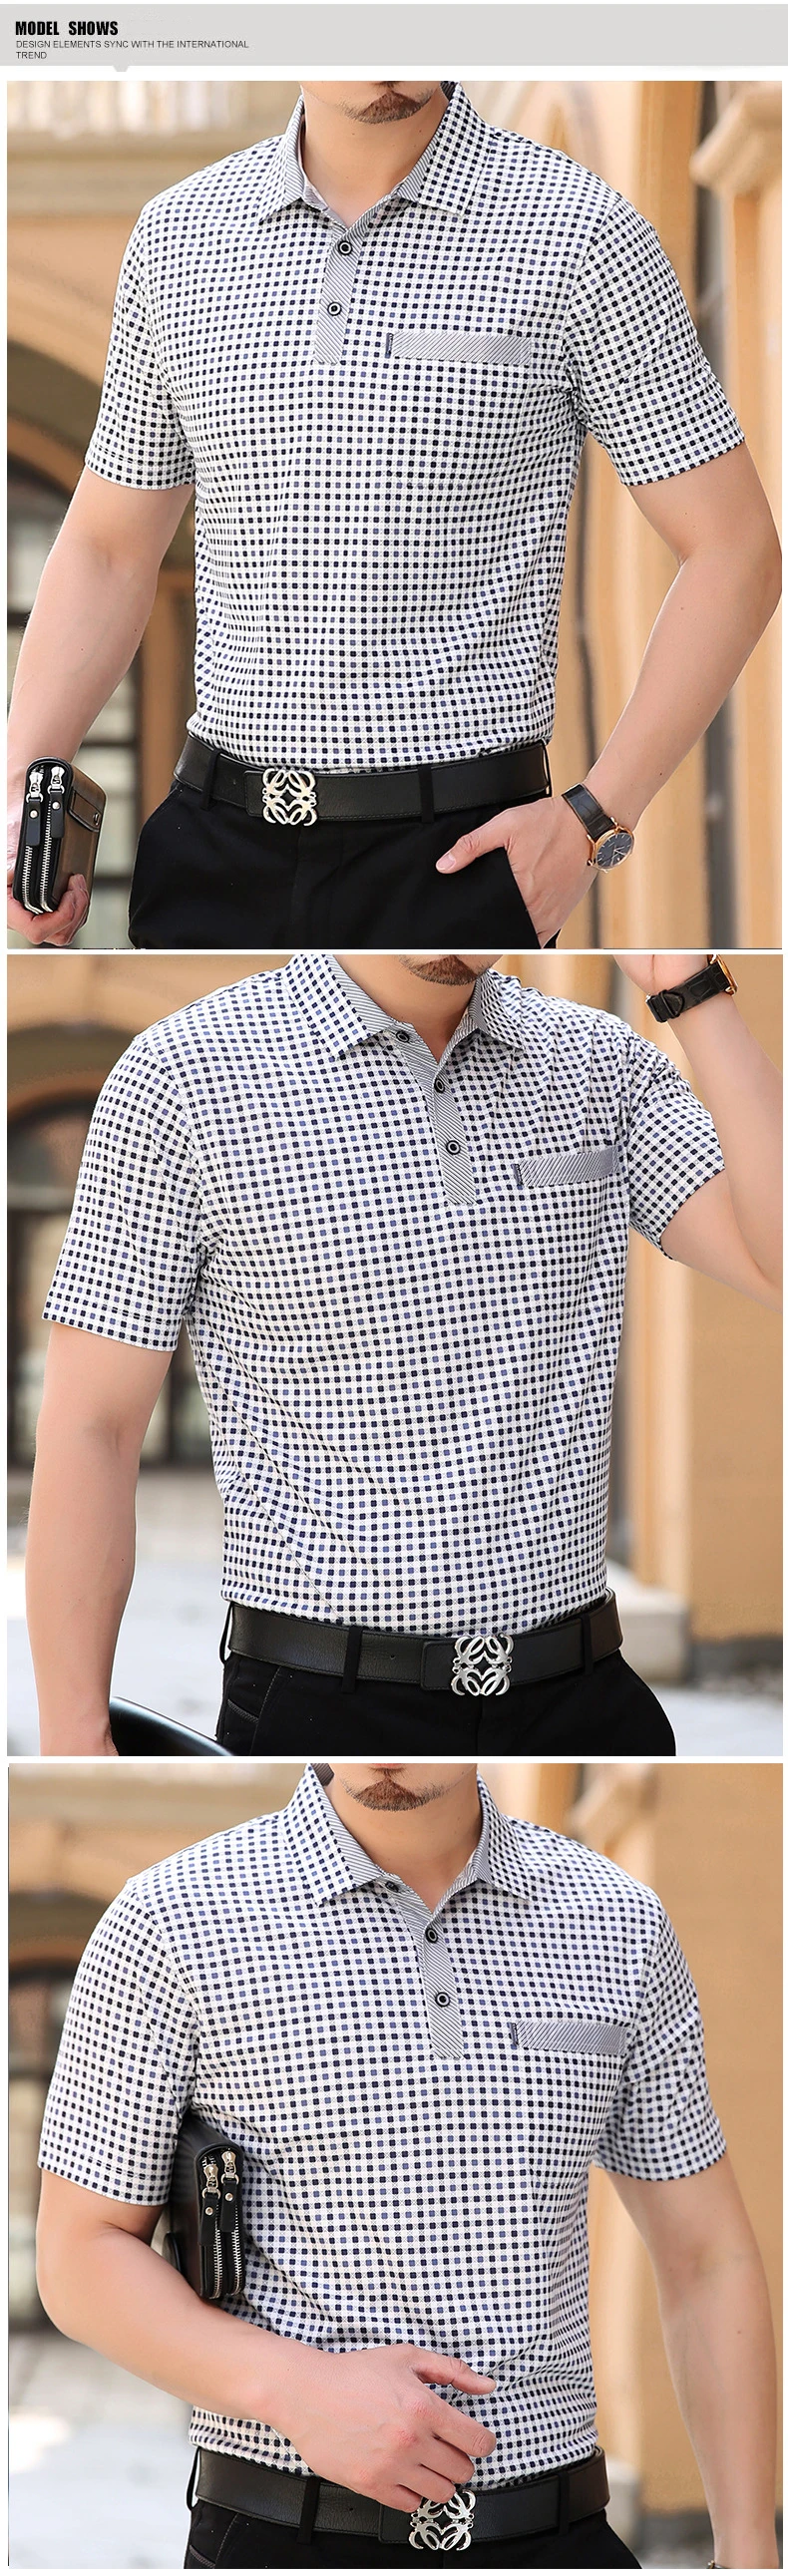 Бренд thoshine 95% вискоза Для мужчин карманы рубашки поло мужская рубашка поло с рисунком рубашка превосходное Camisa Рубашки с отложным воротничком, летняя одежда